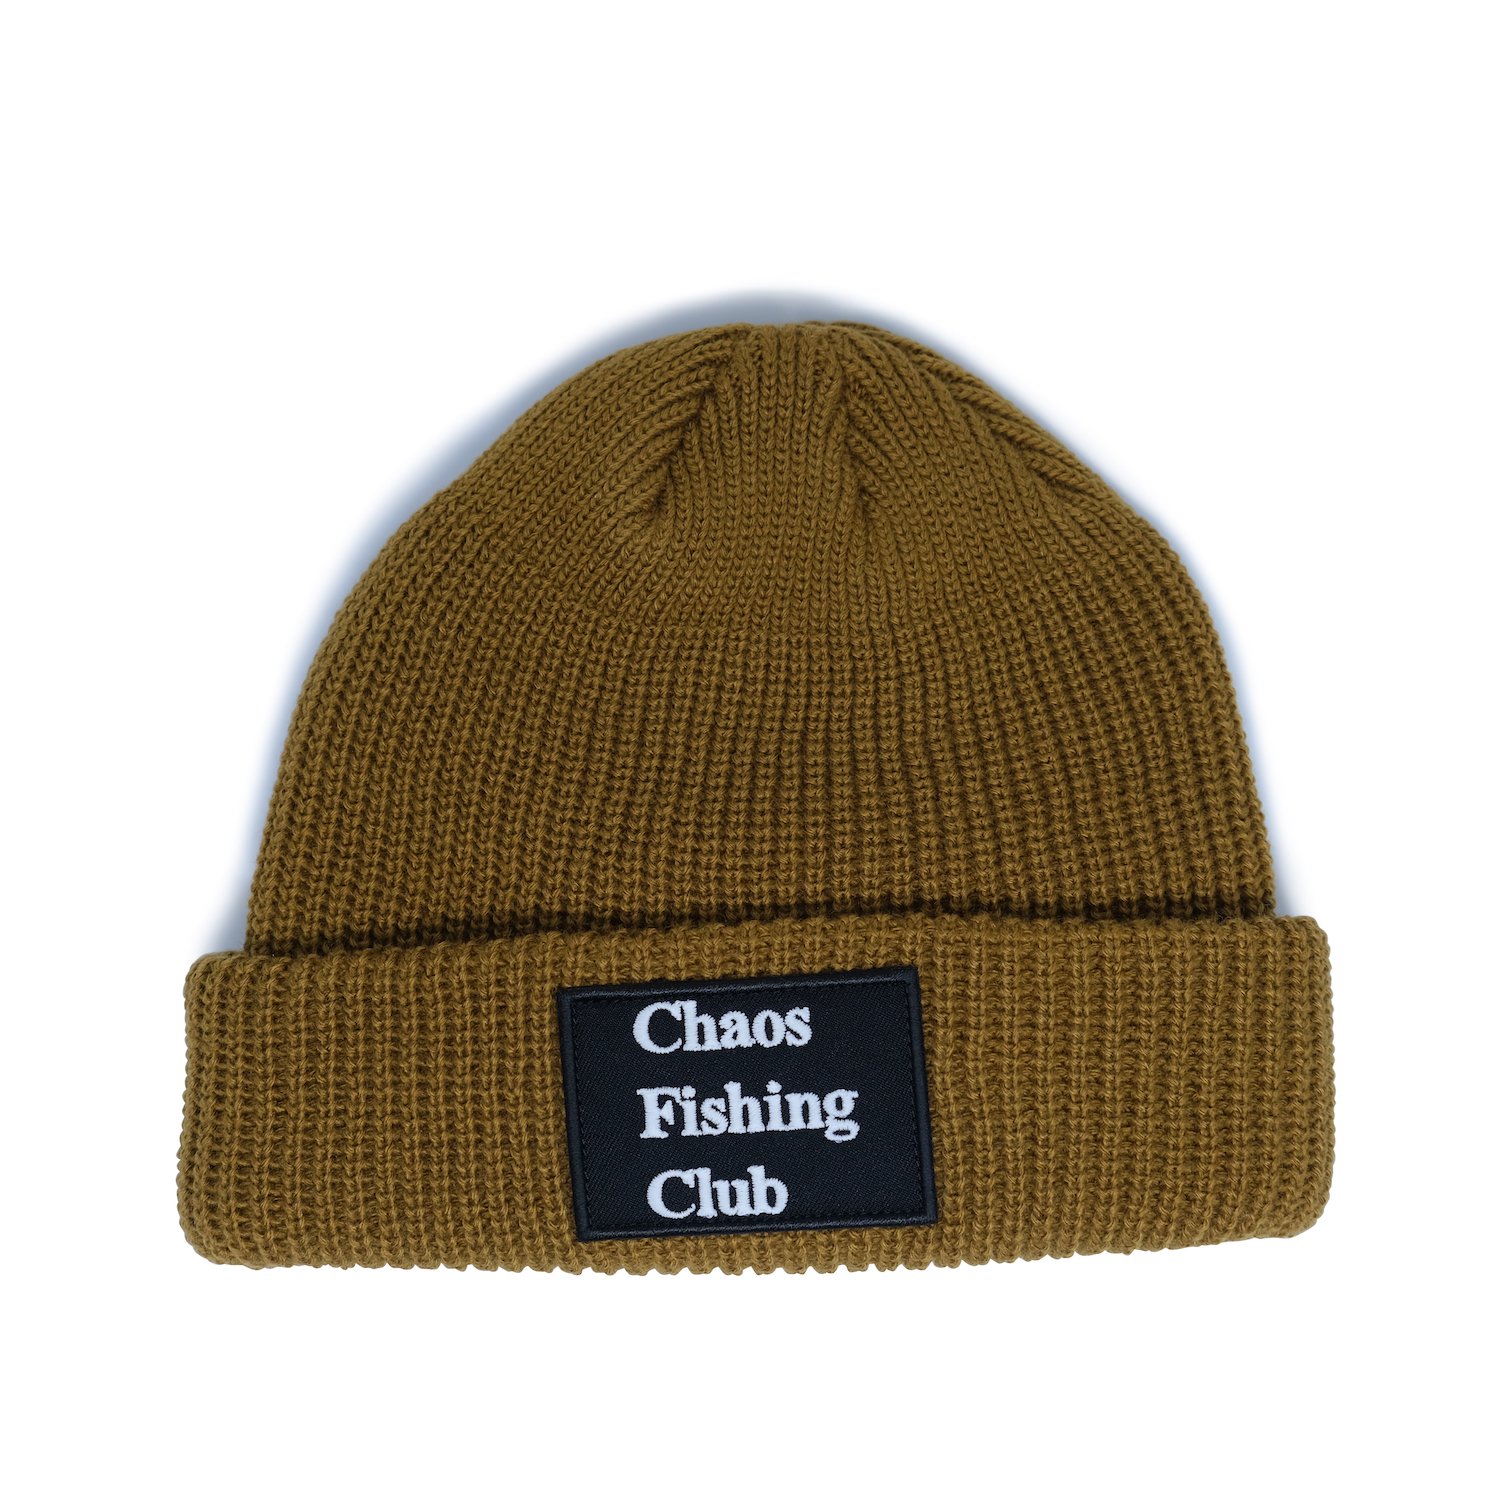 Chaos Fishing Club<br>LOGO KNIT CAP<br>